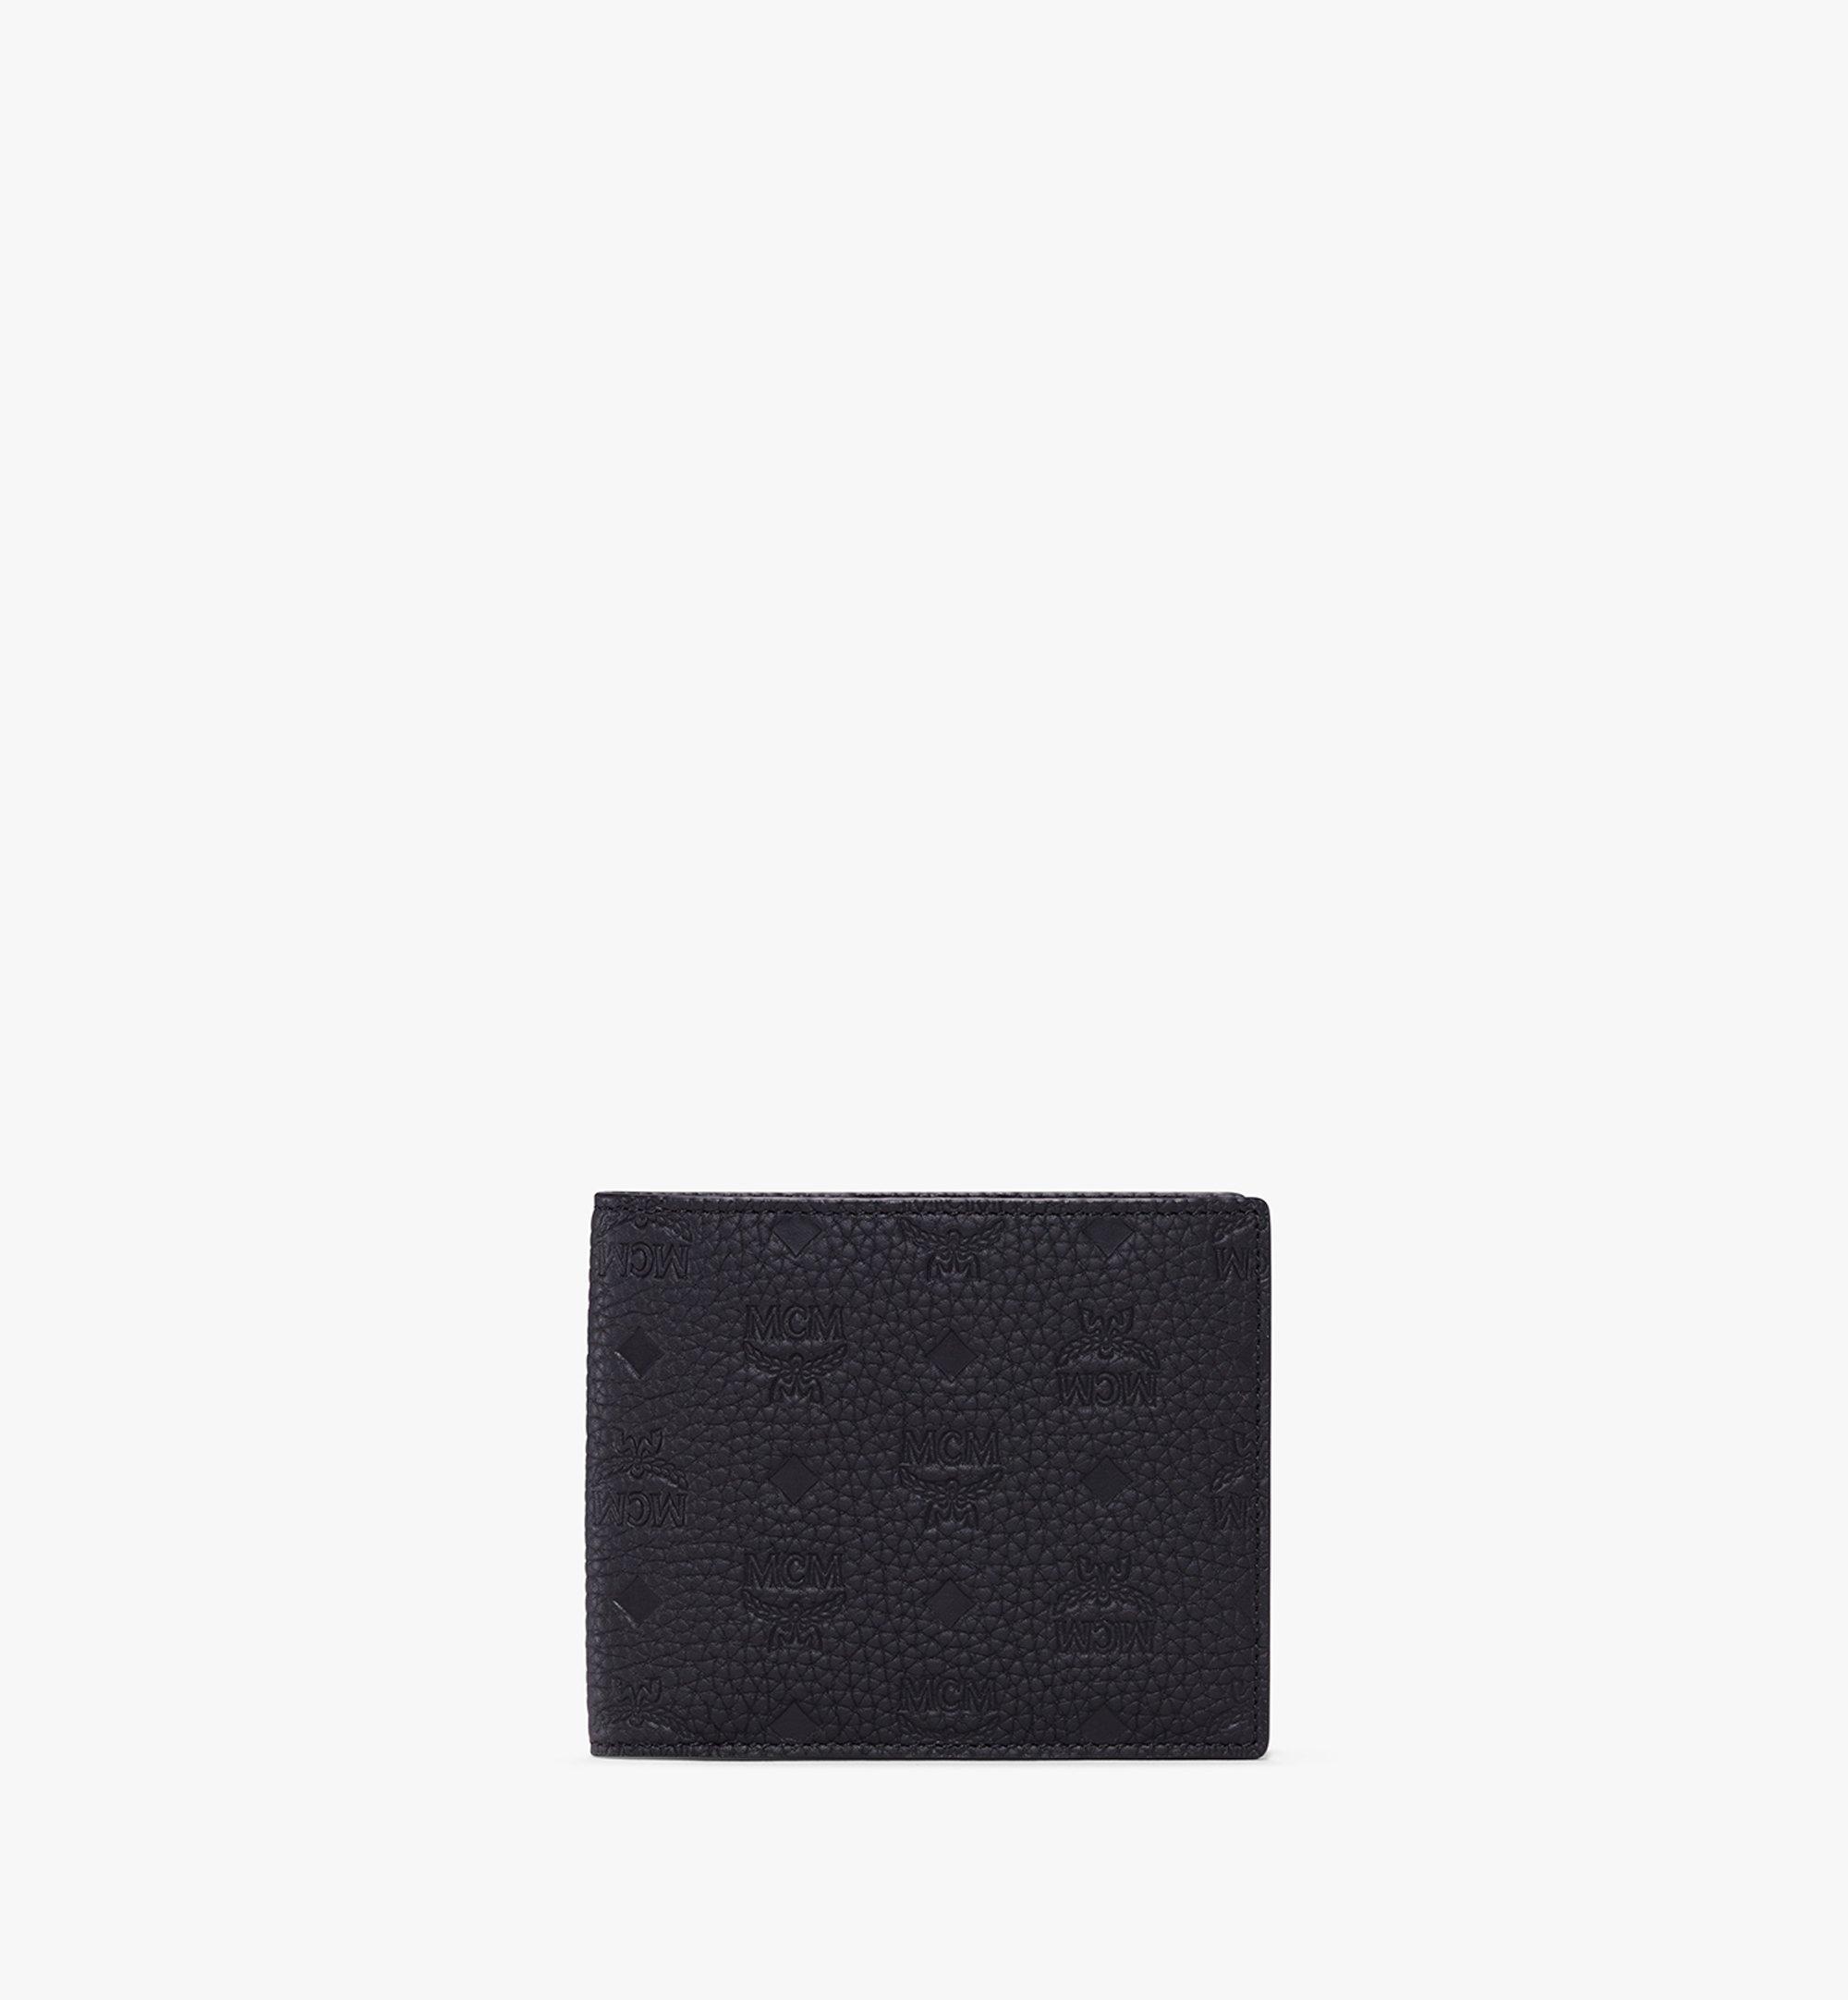 MCM Bifold Wallet in Tivitat Leather Black MXS9ABT23BK001 Alternate View 1